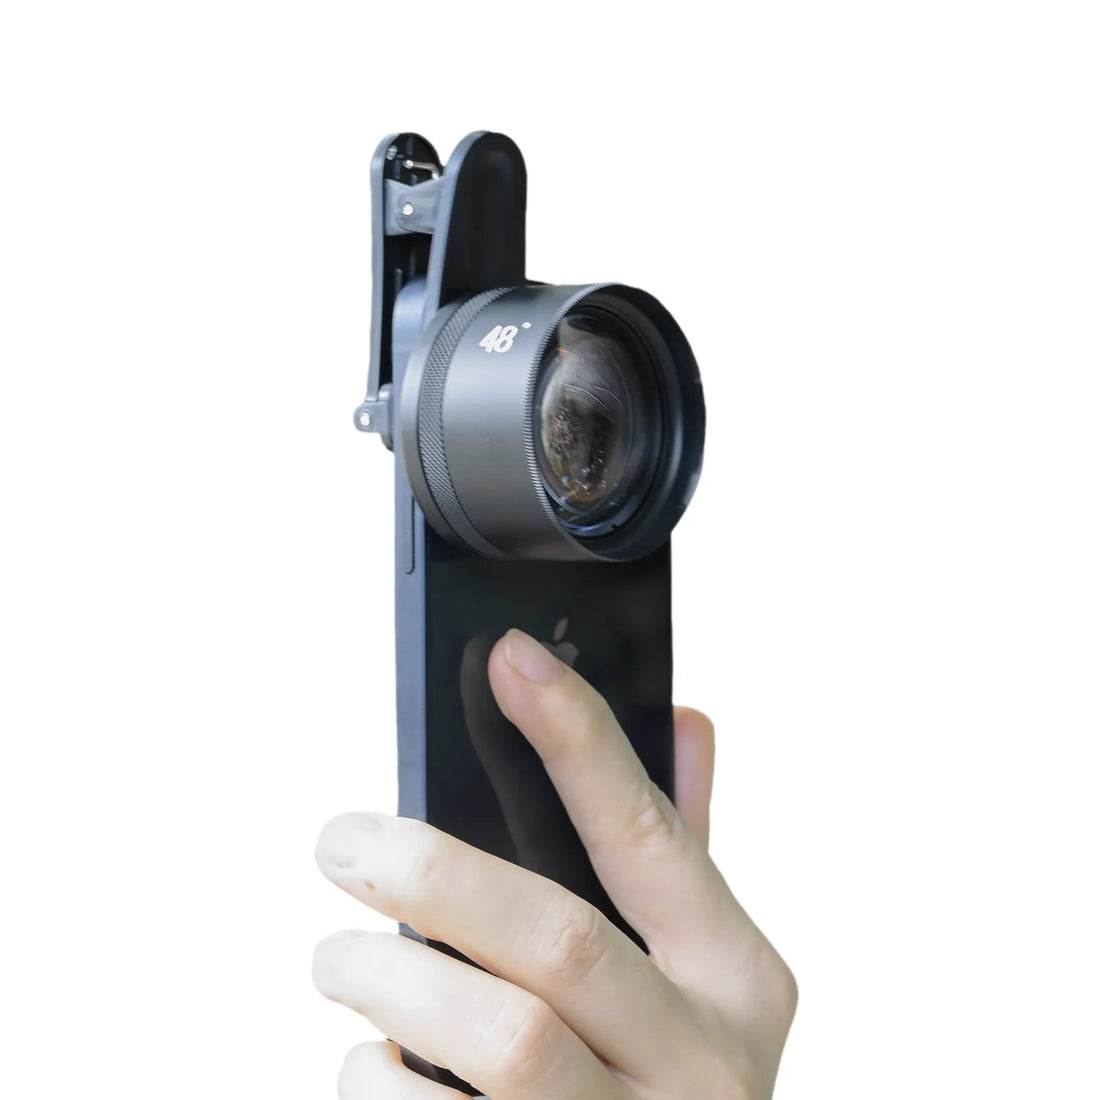 [NEW] Kase 48° Telephoto Mobile Camera Lens for Professional Portraits Shots Best Lenses Kase Pro Lens Zoom - Kase - Mobile Lens - Mobile Camera Lens - Cellphone Accessories - Phone Lens - Smartphone Lens